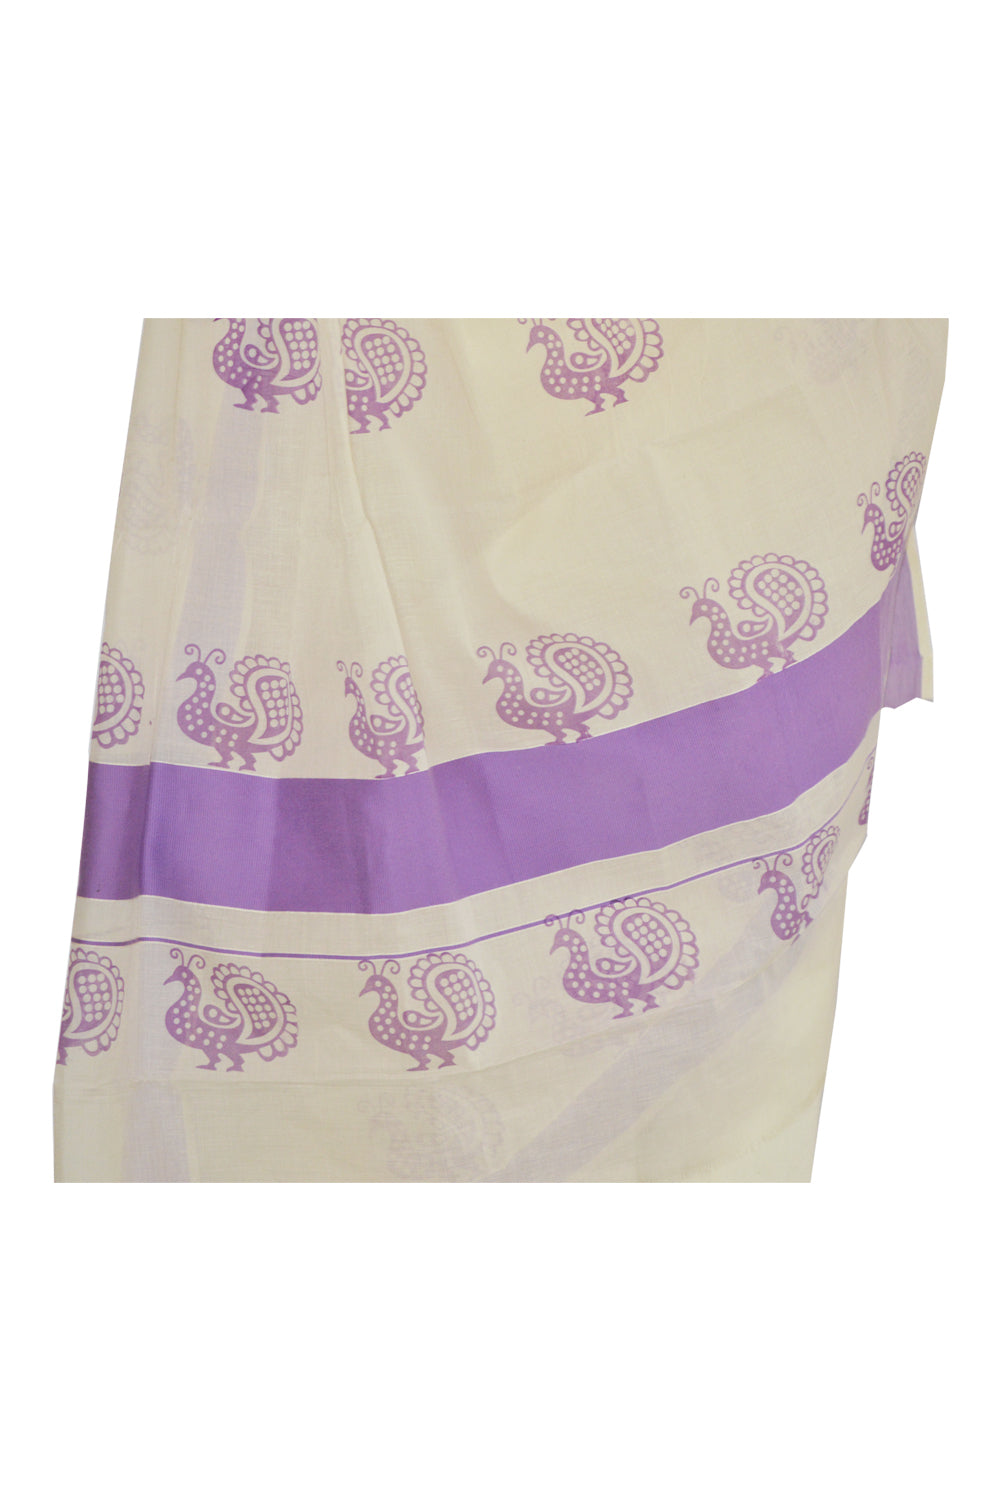 Kerala Saree with Lavender Peacock Block Print